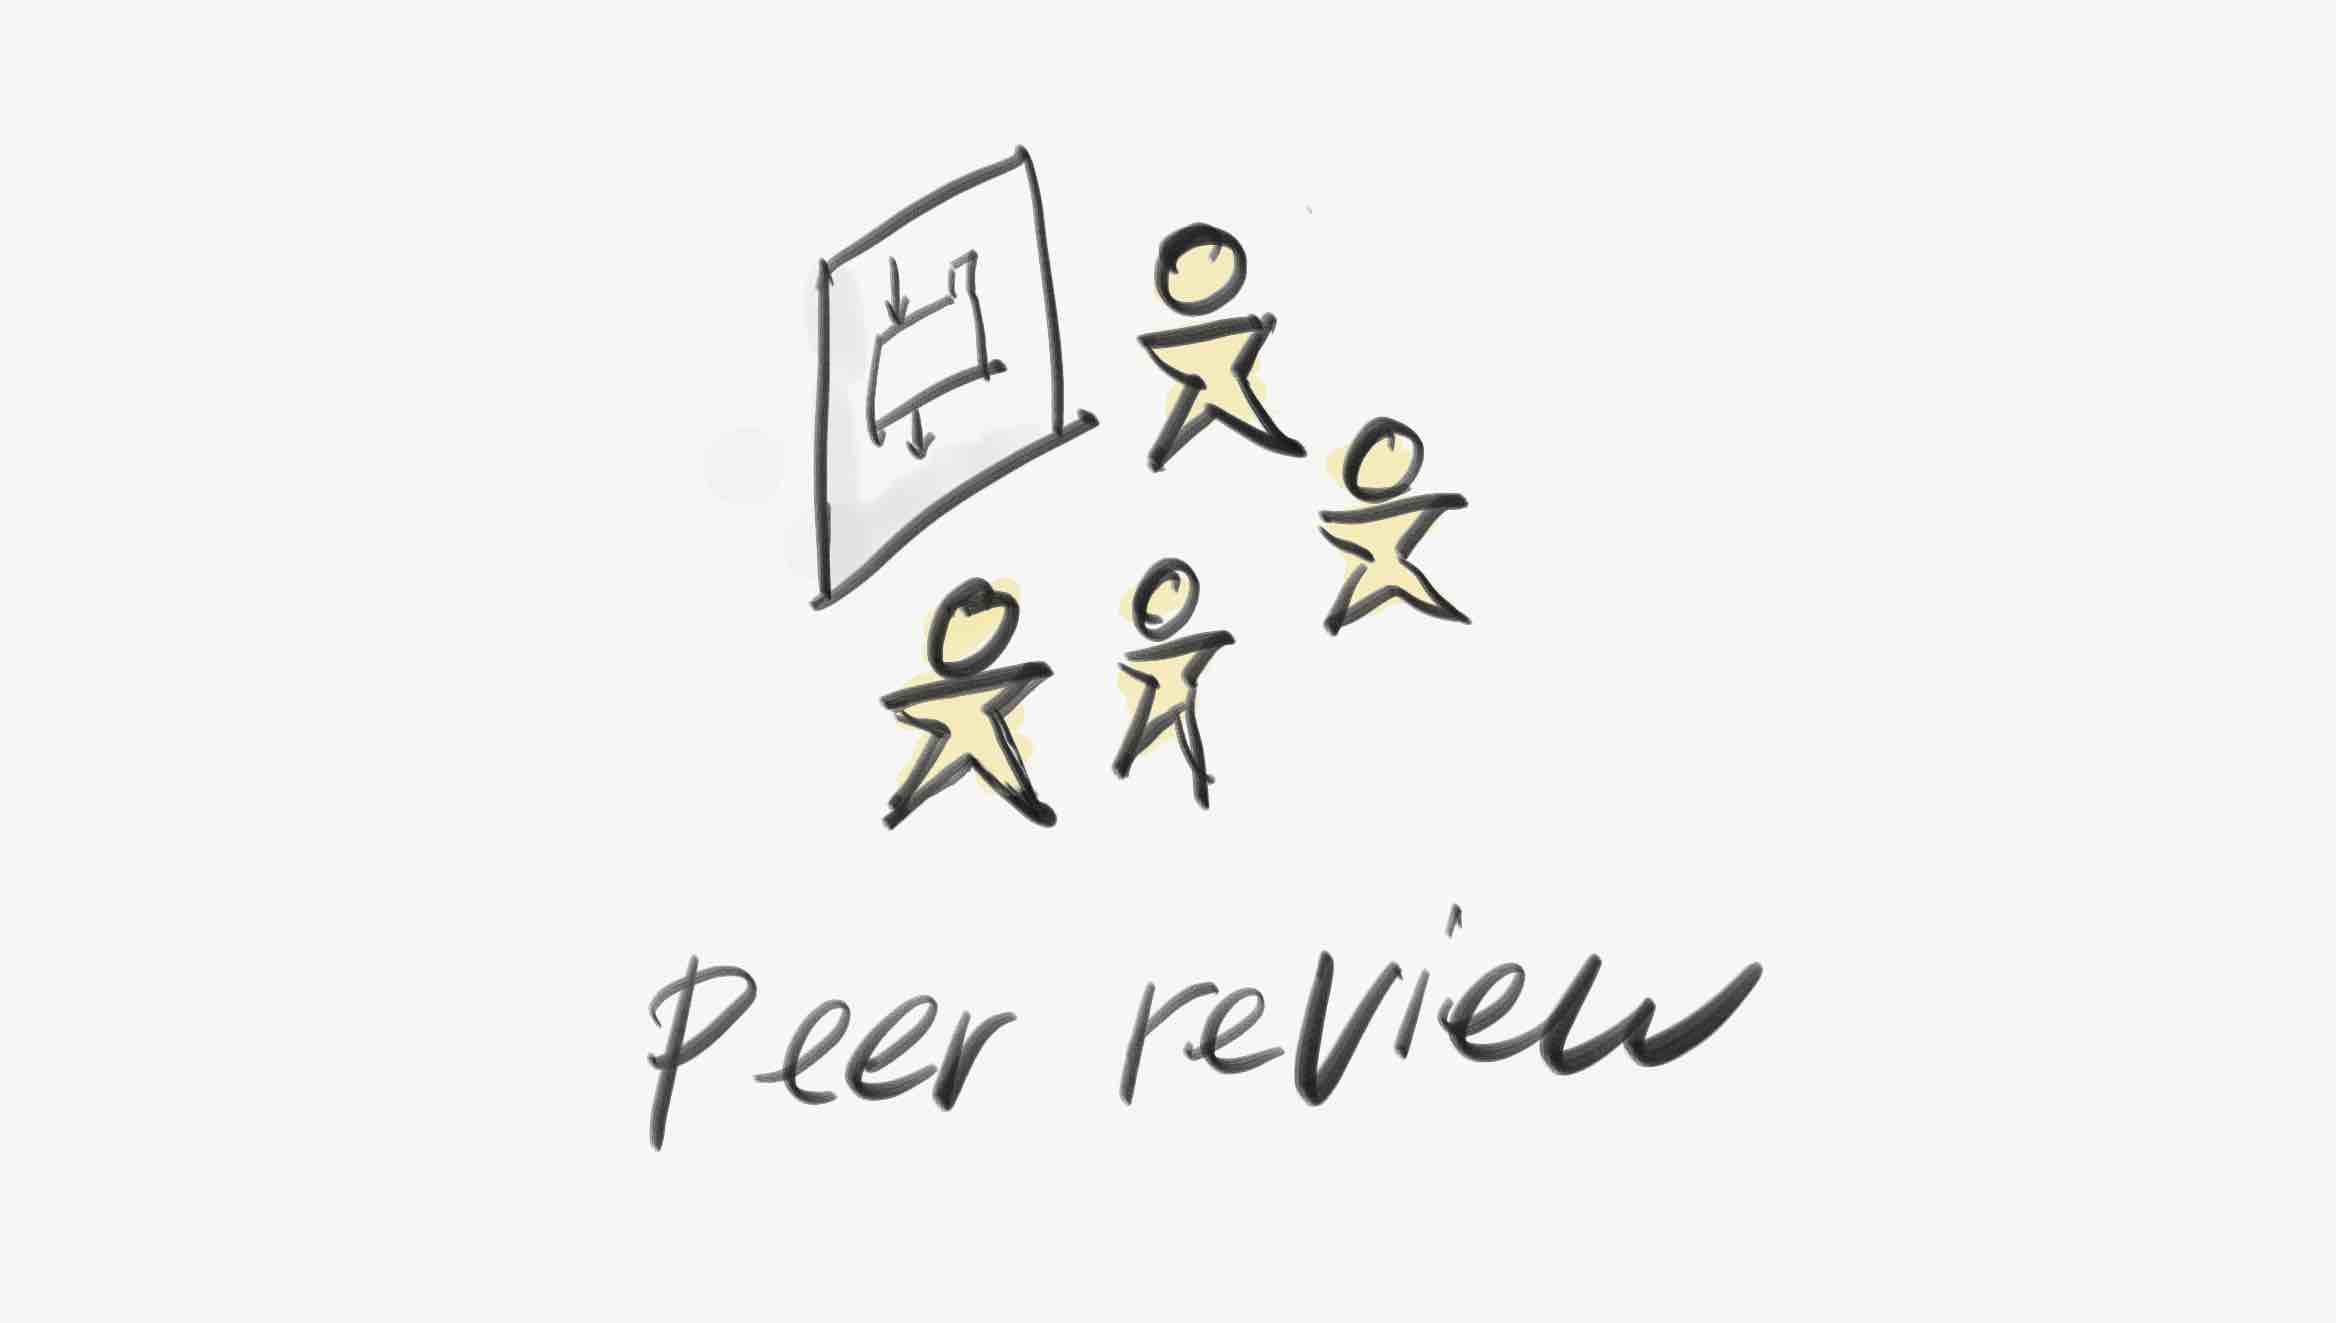 Peer Review Illustration